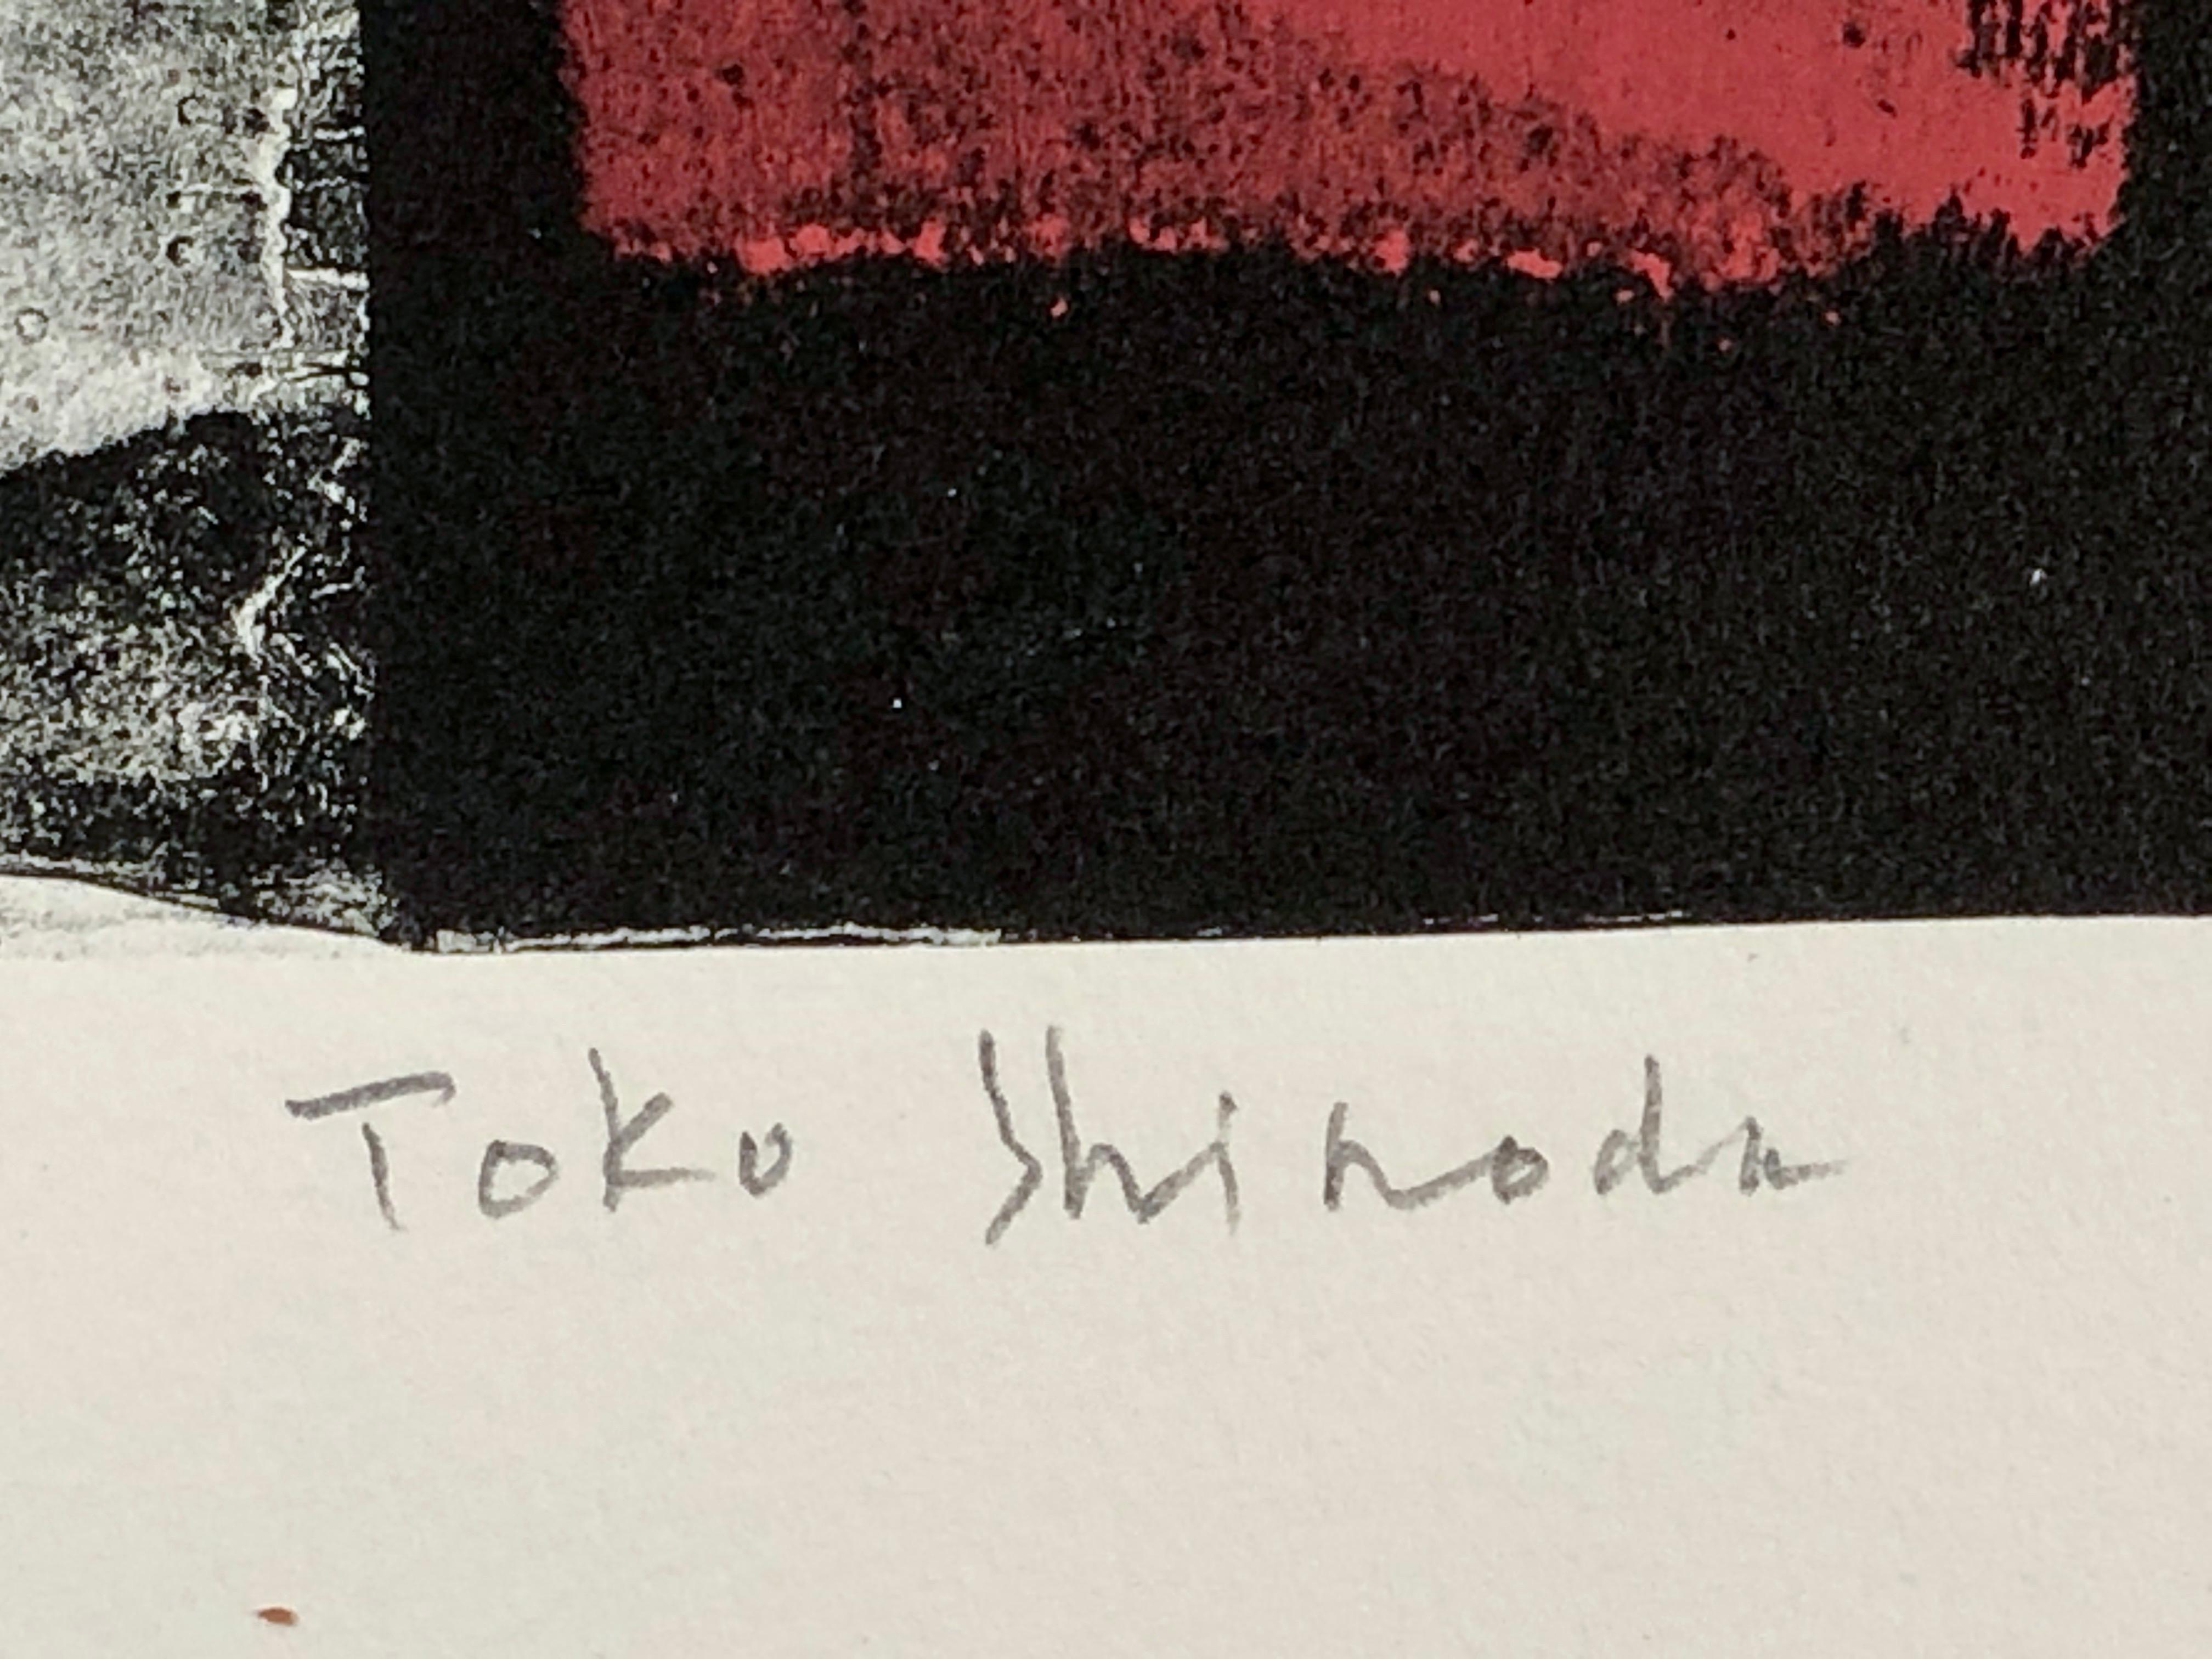 toko shinoda art for sale